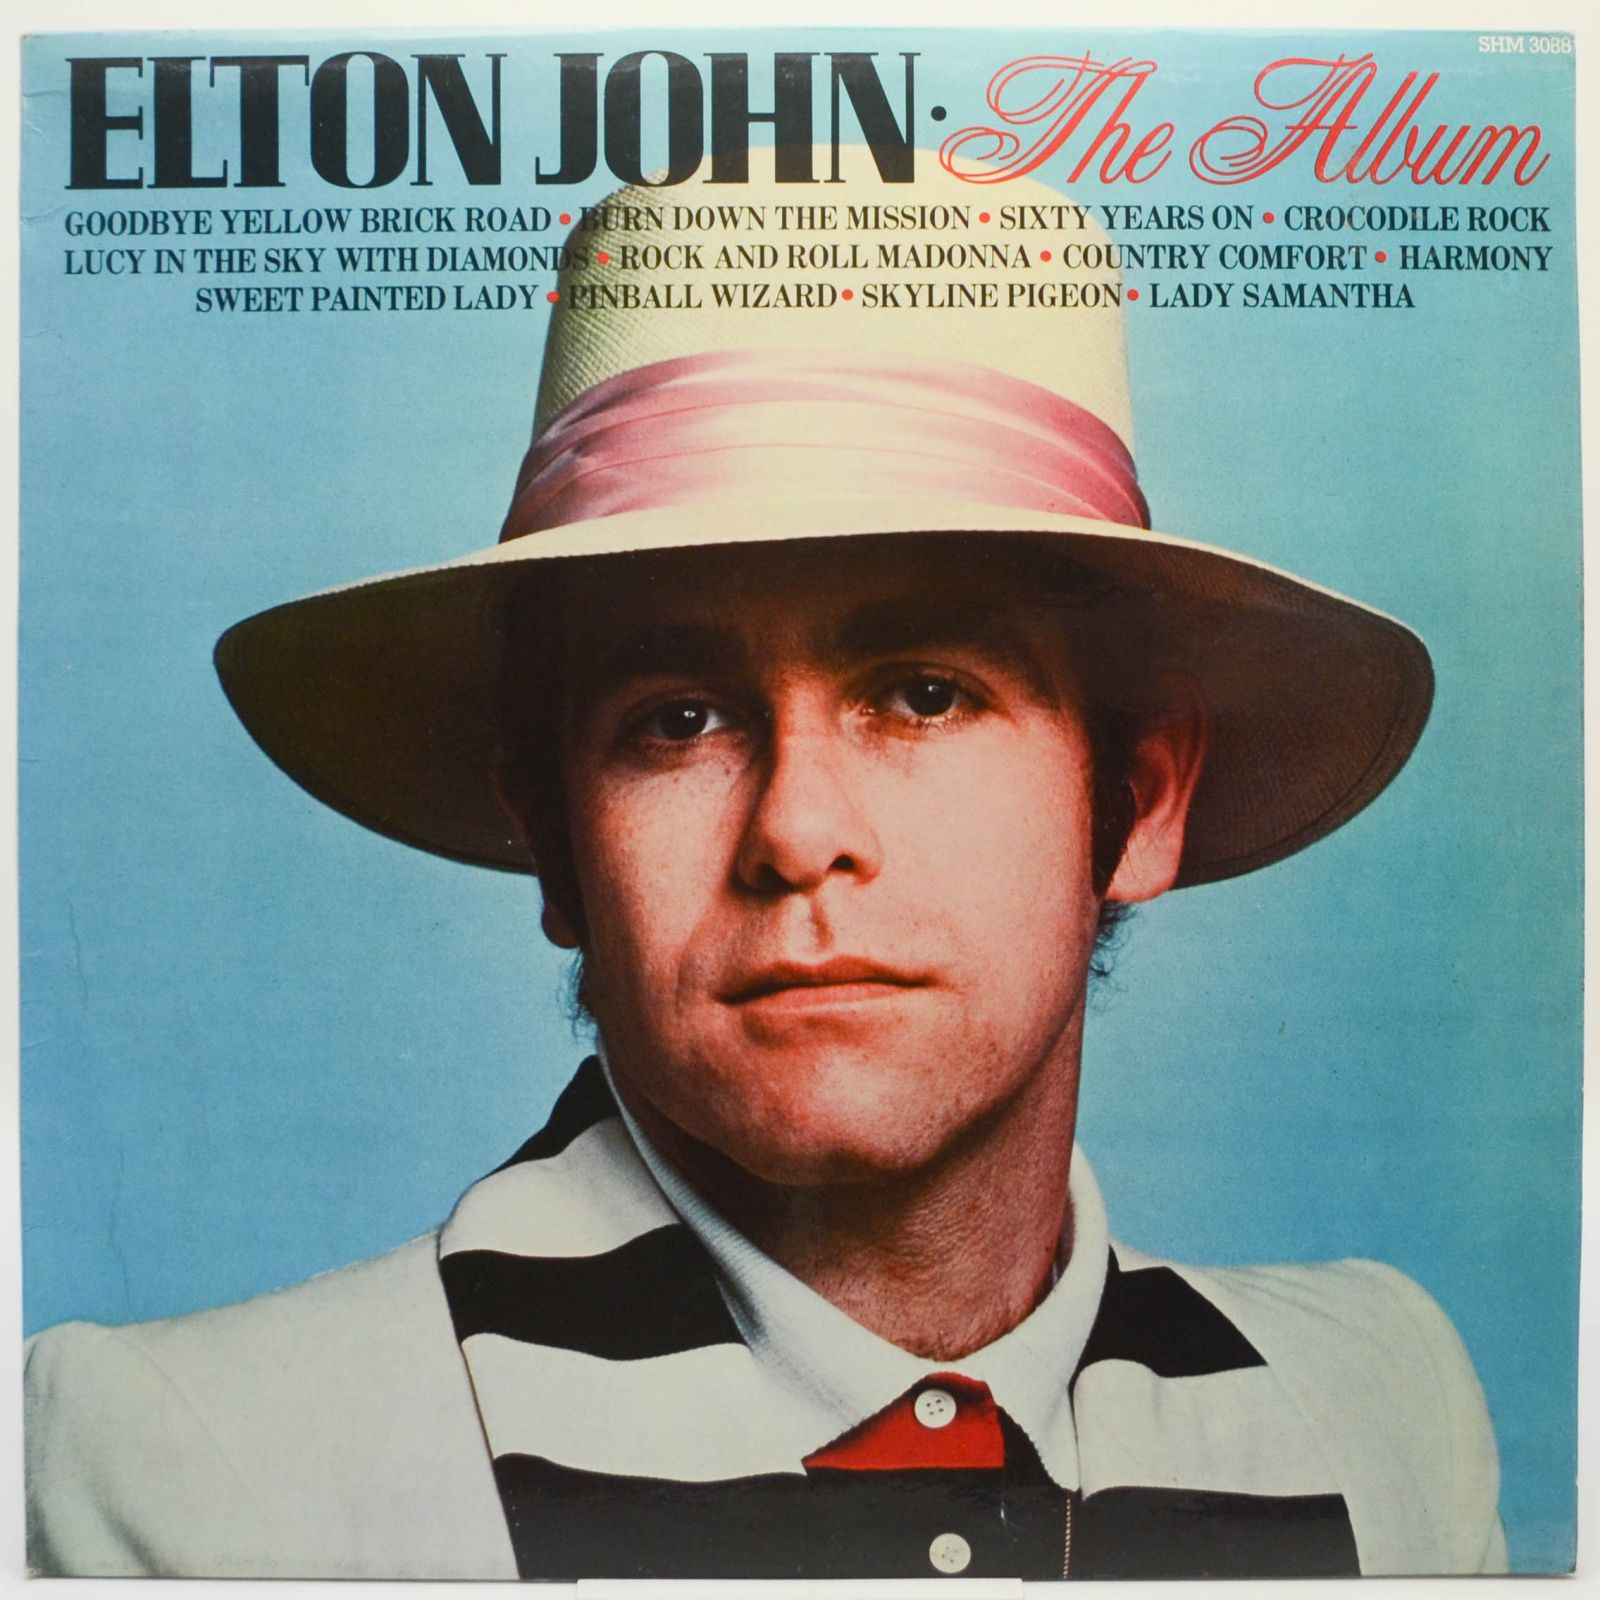 Elton John — The Album (UK), 1981